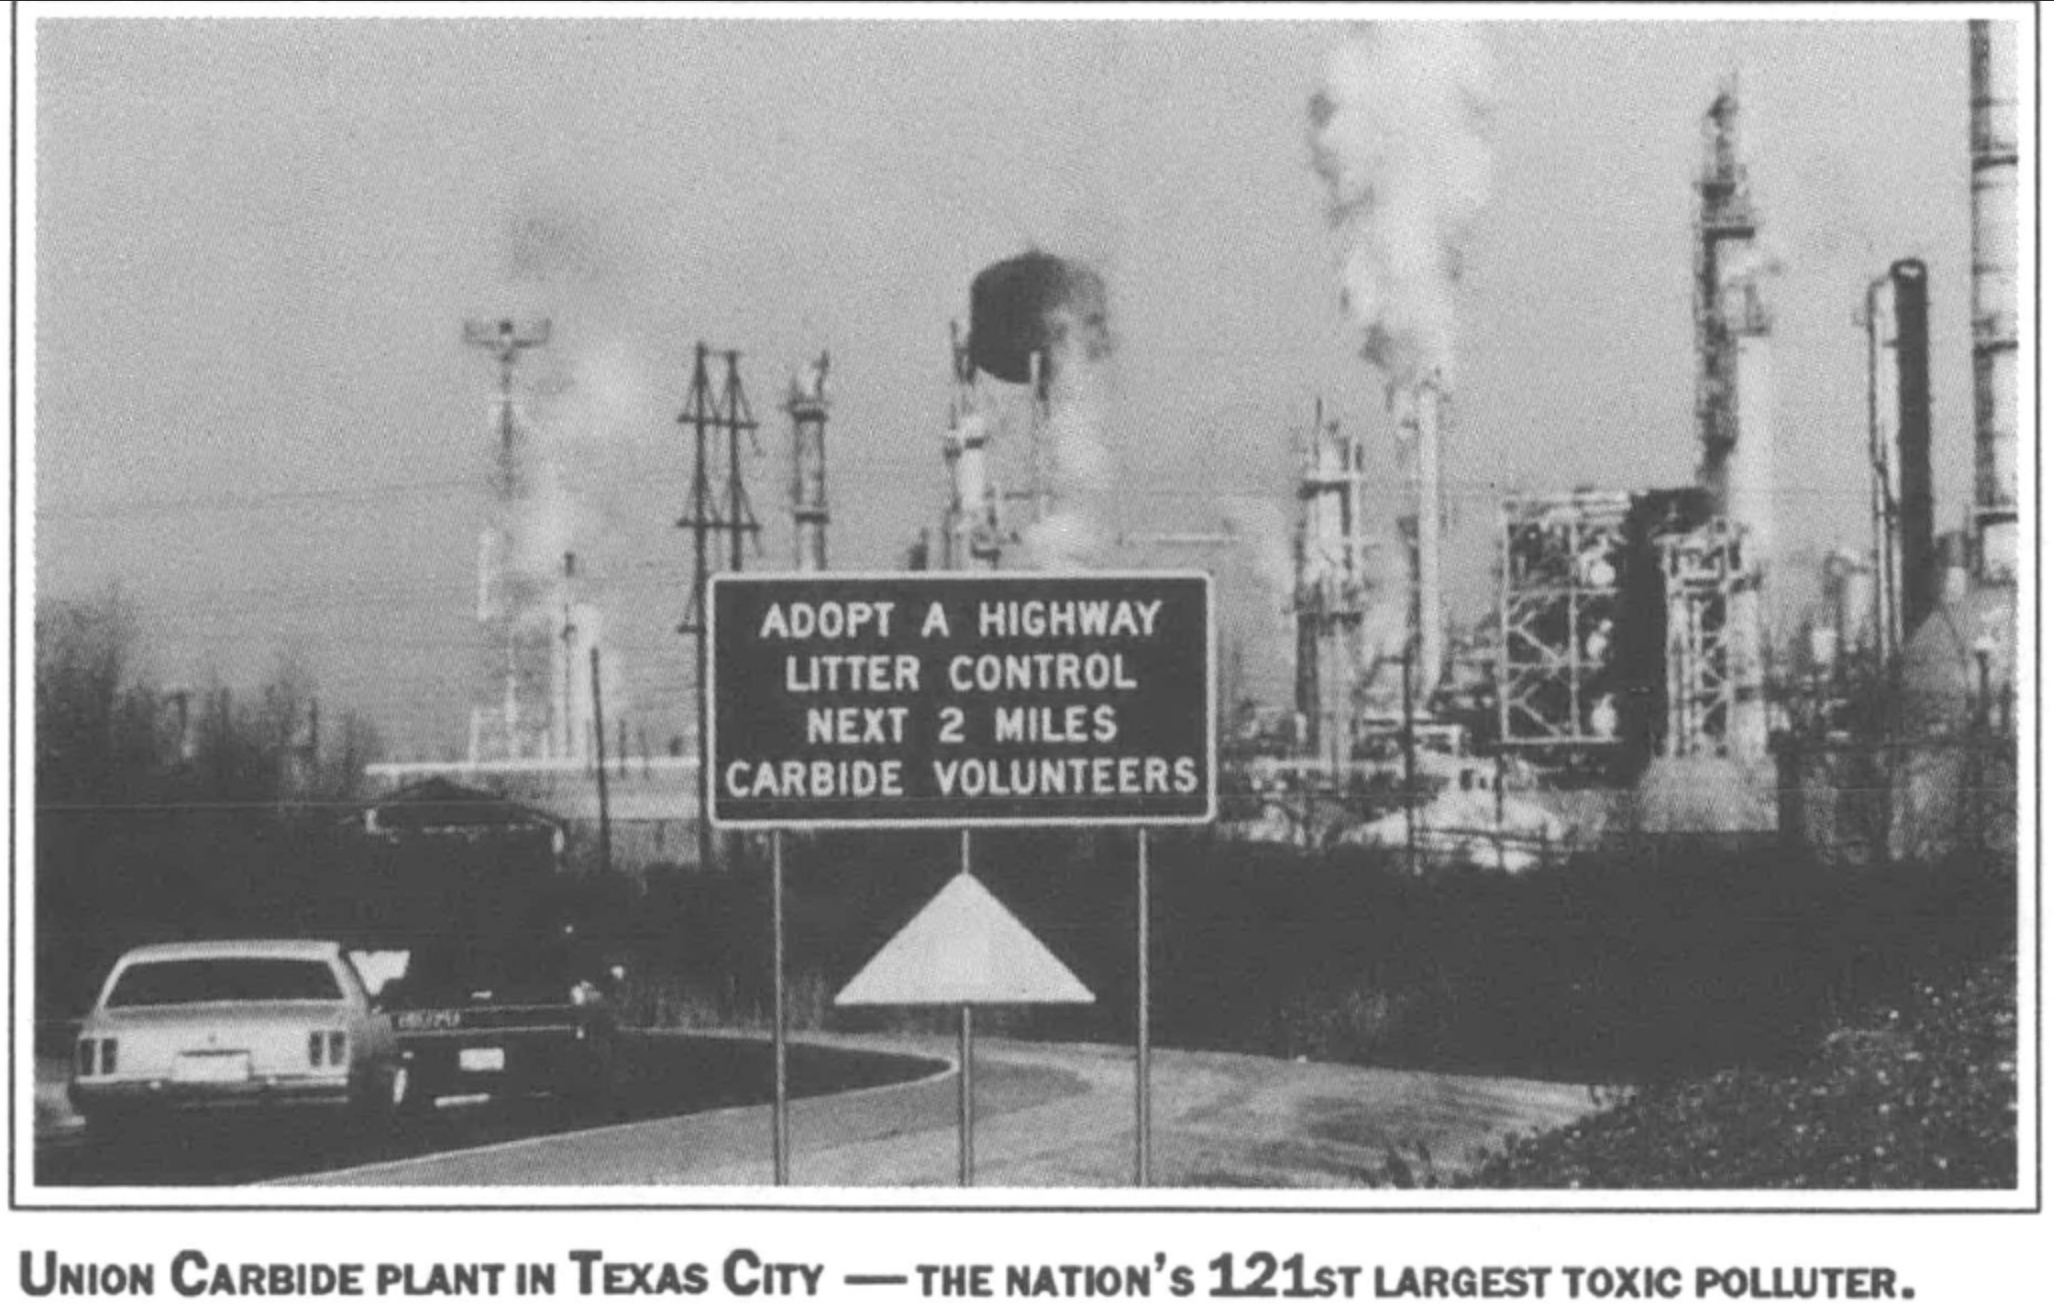 union carbide plant in Texas City